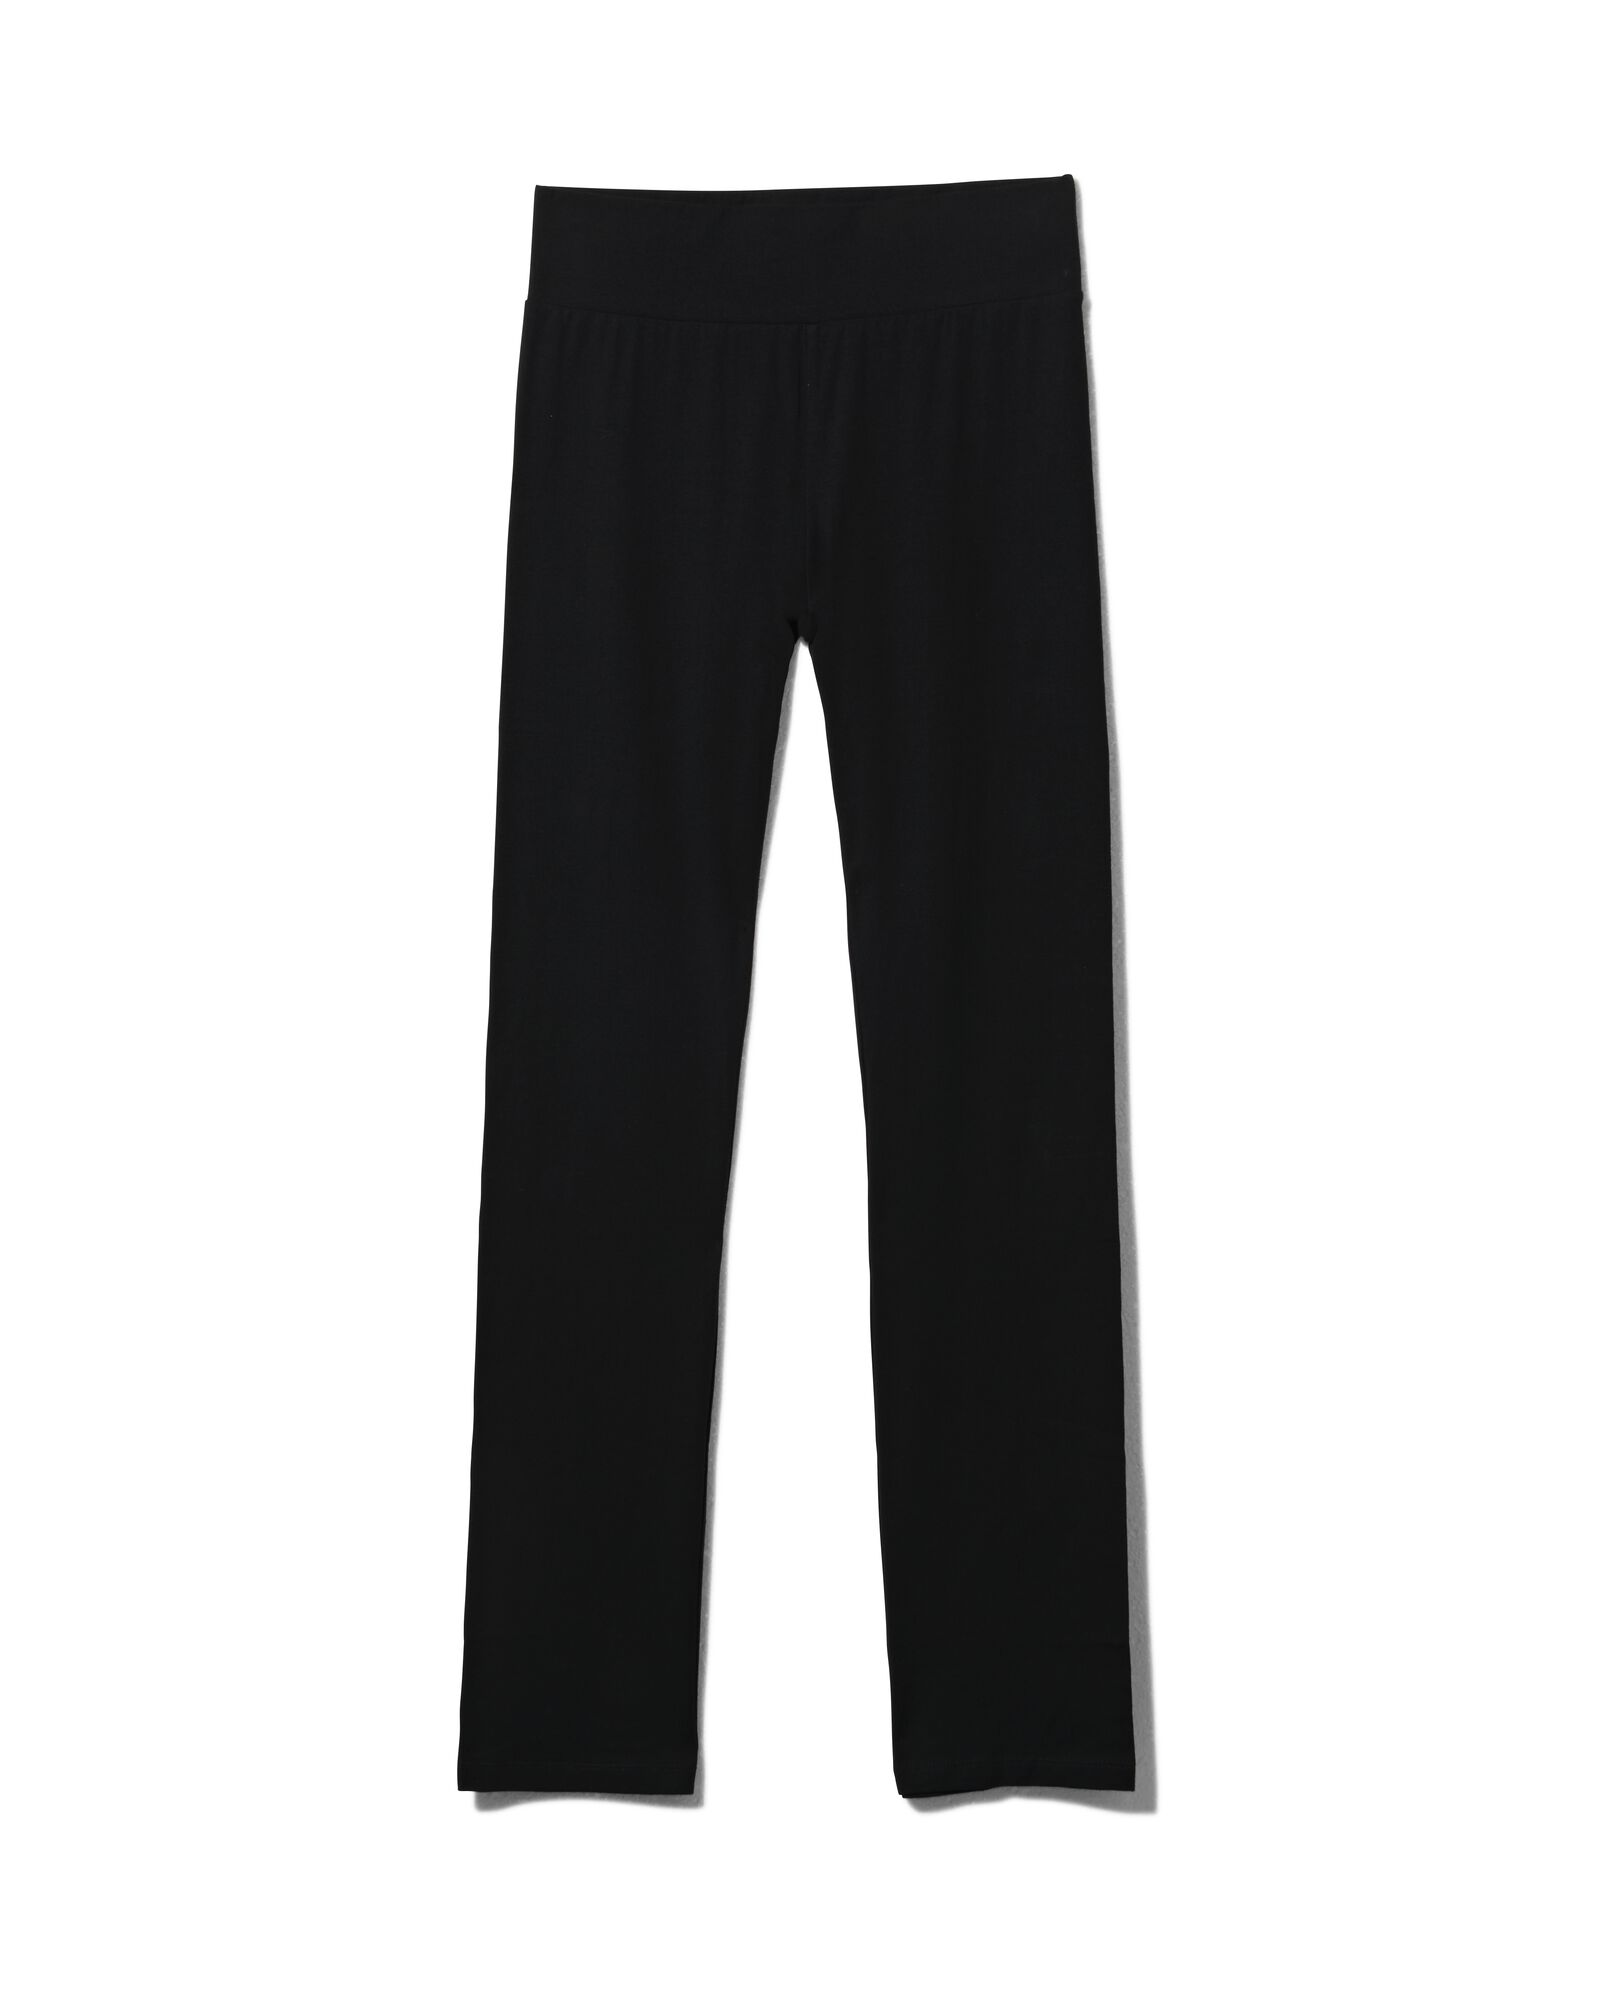 pantalon de yoga femme noir S - 36089301 - HEMA